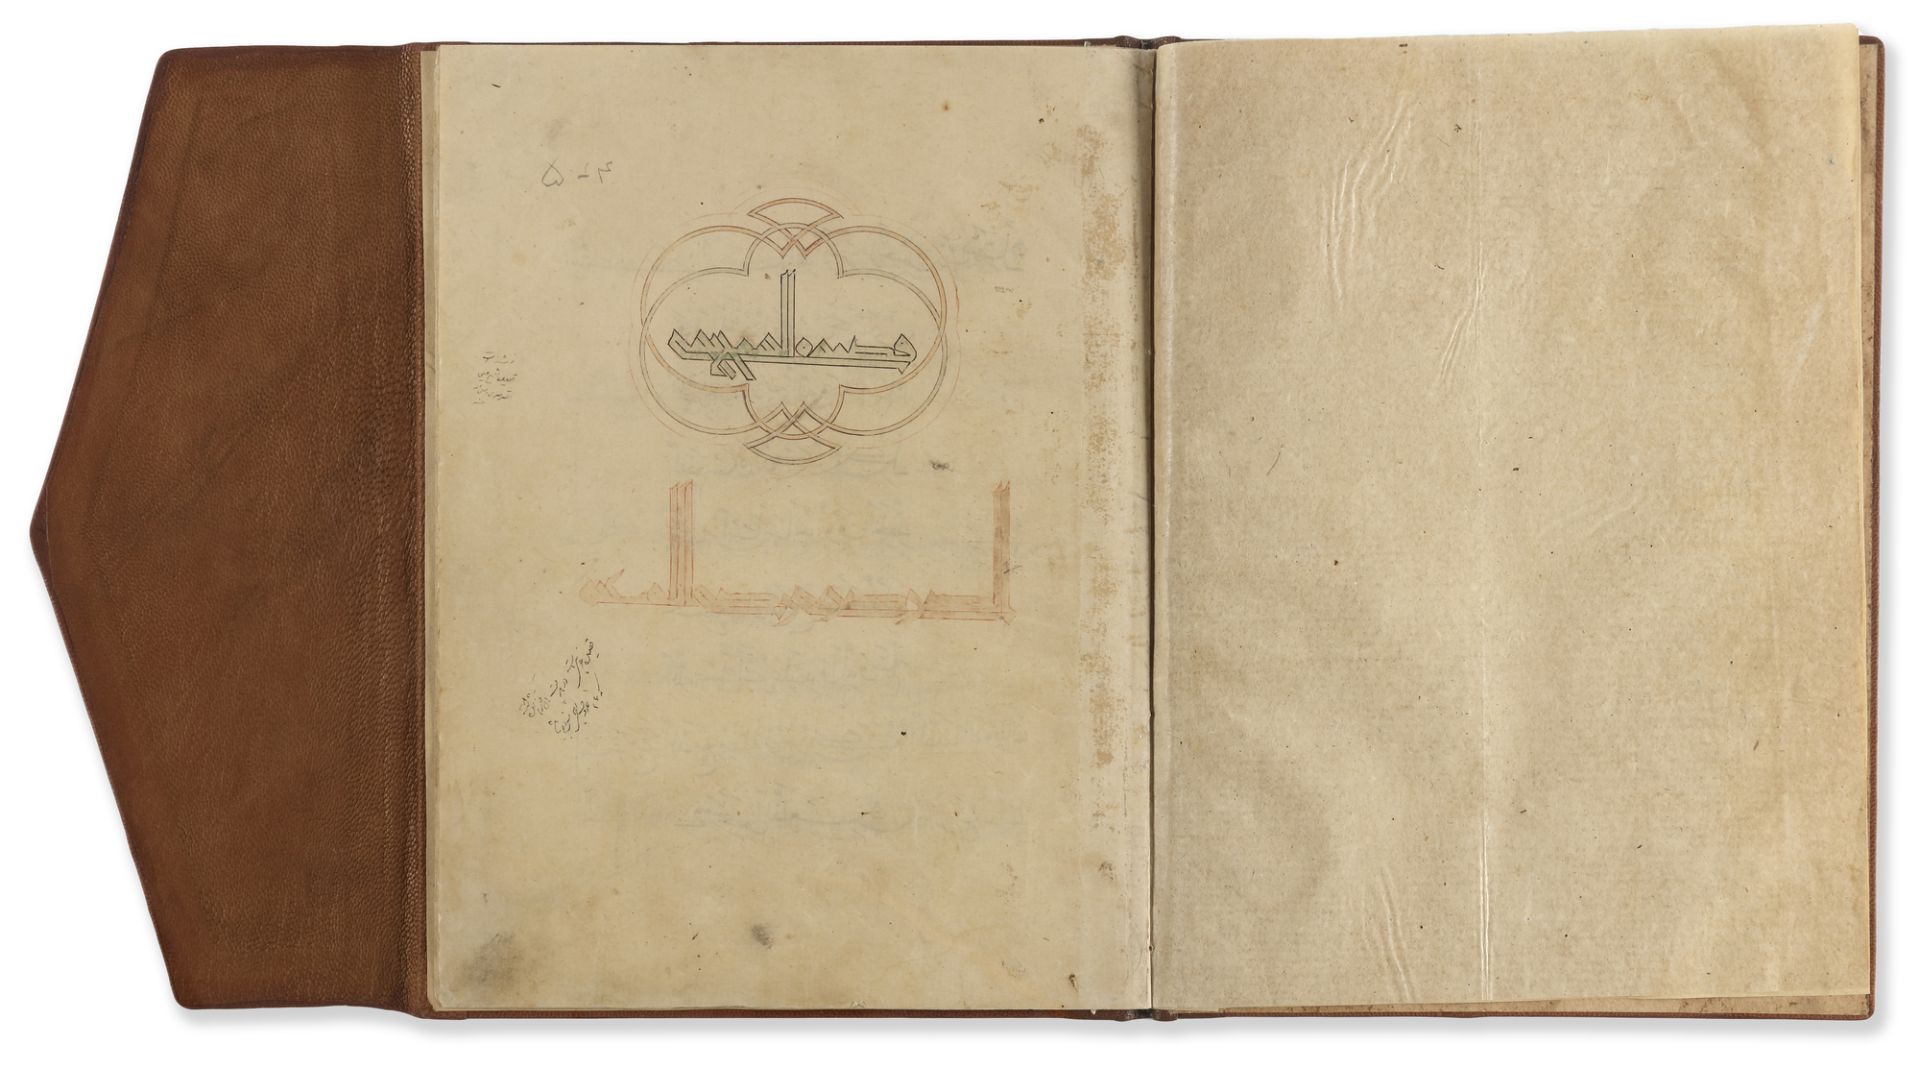 QASDIAT AL-SARIRIA, BY AHMED BIN AL-SAHRAWARDI, STUDENT OF THE FAMOUS YAQUT AL-MUSTASIMI, 14TH CENTU - Image 4 of 9